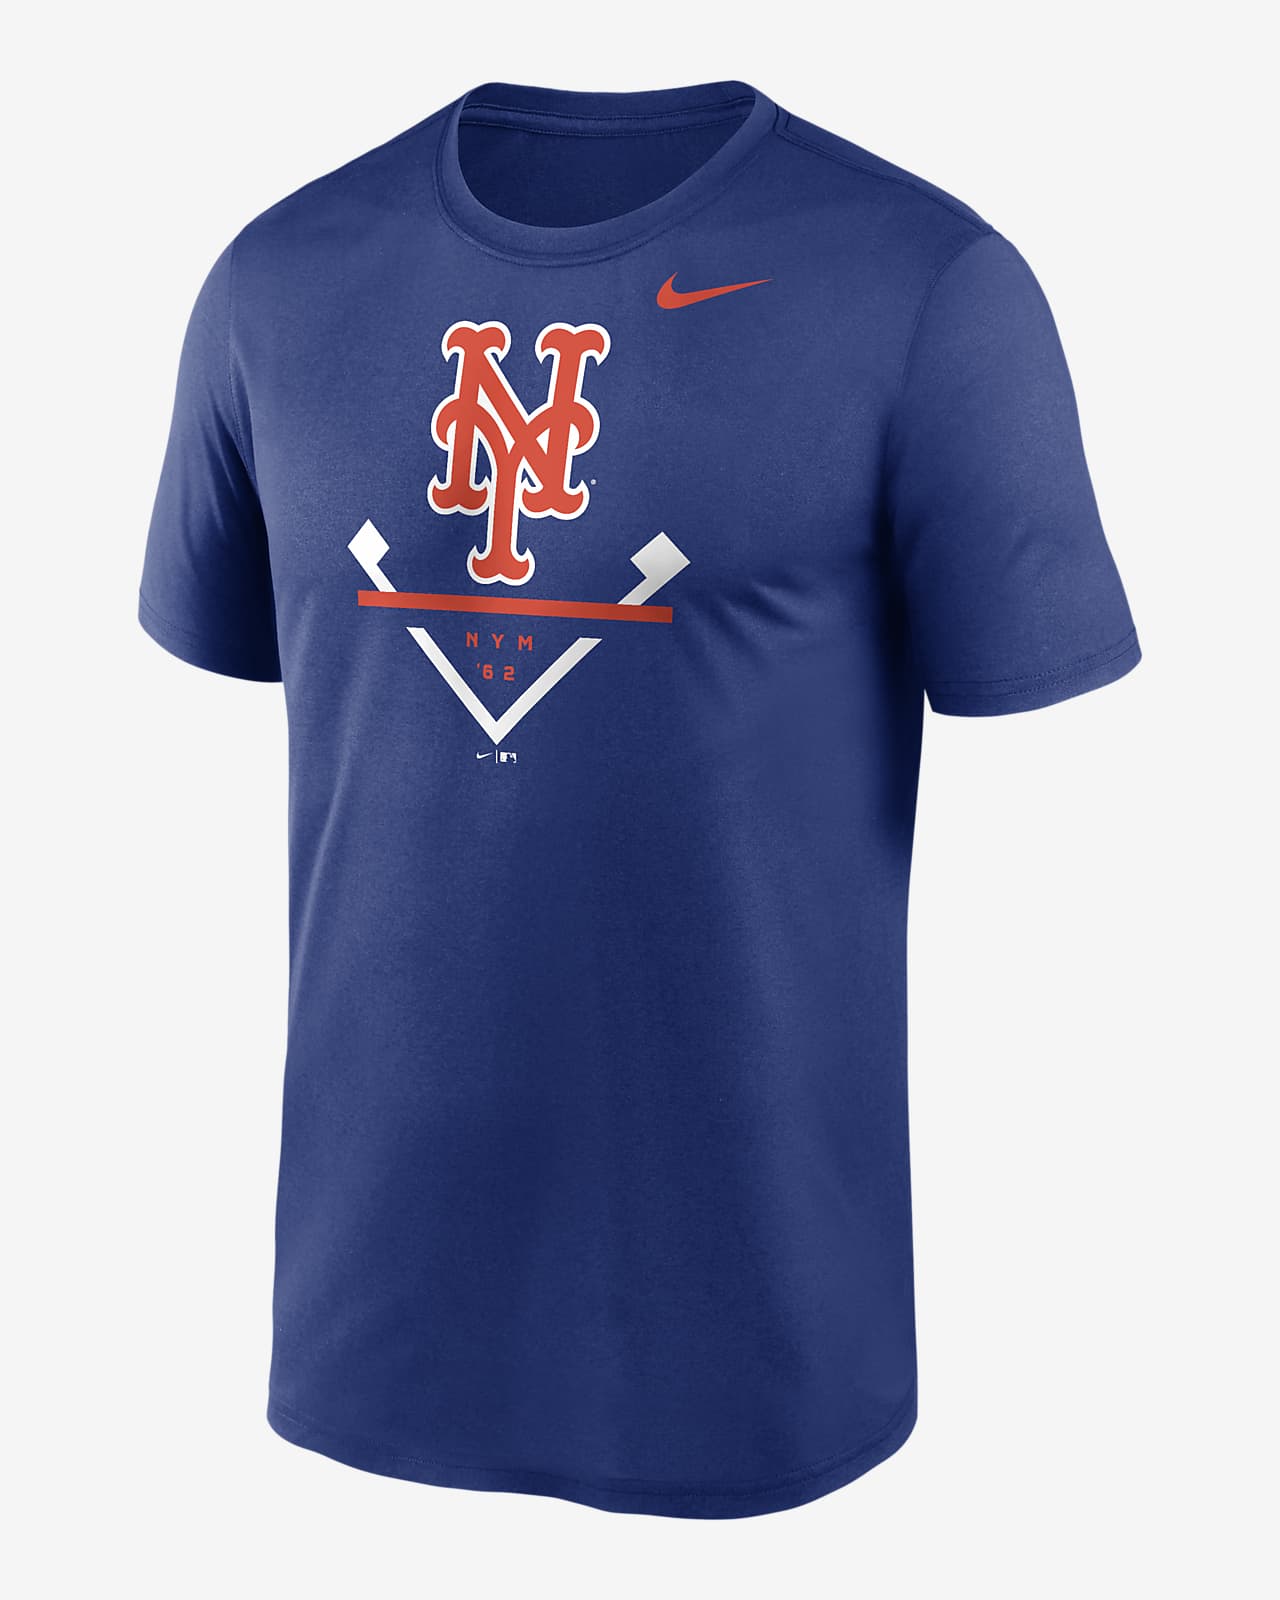 Nike Dri-FIT Icon Legend (MLB New York Mets) Men's T-Shirt.